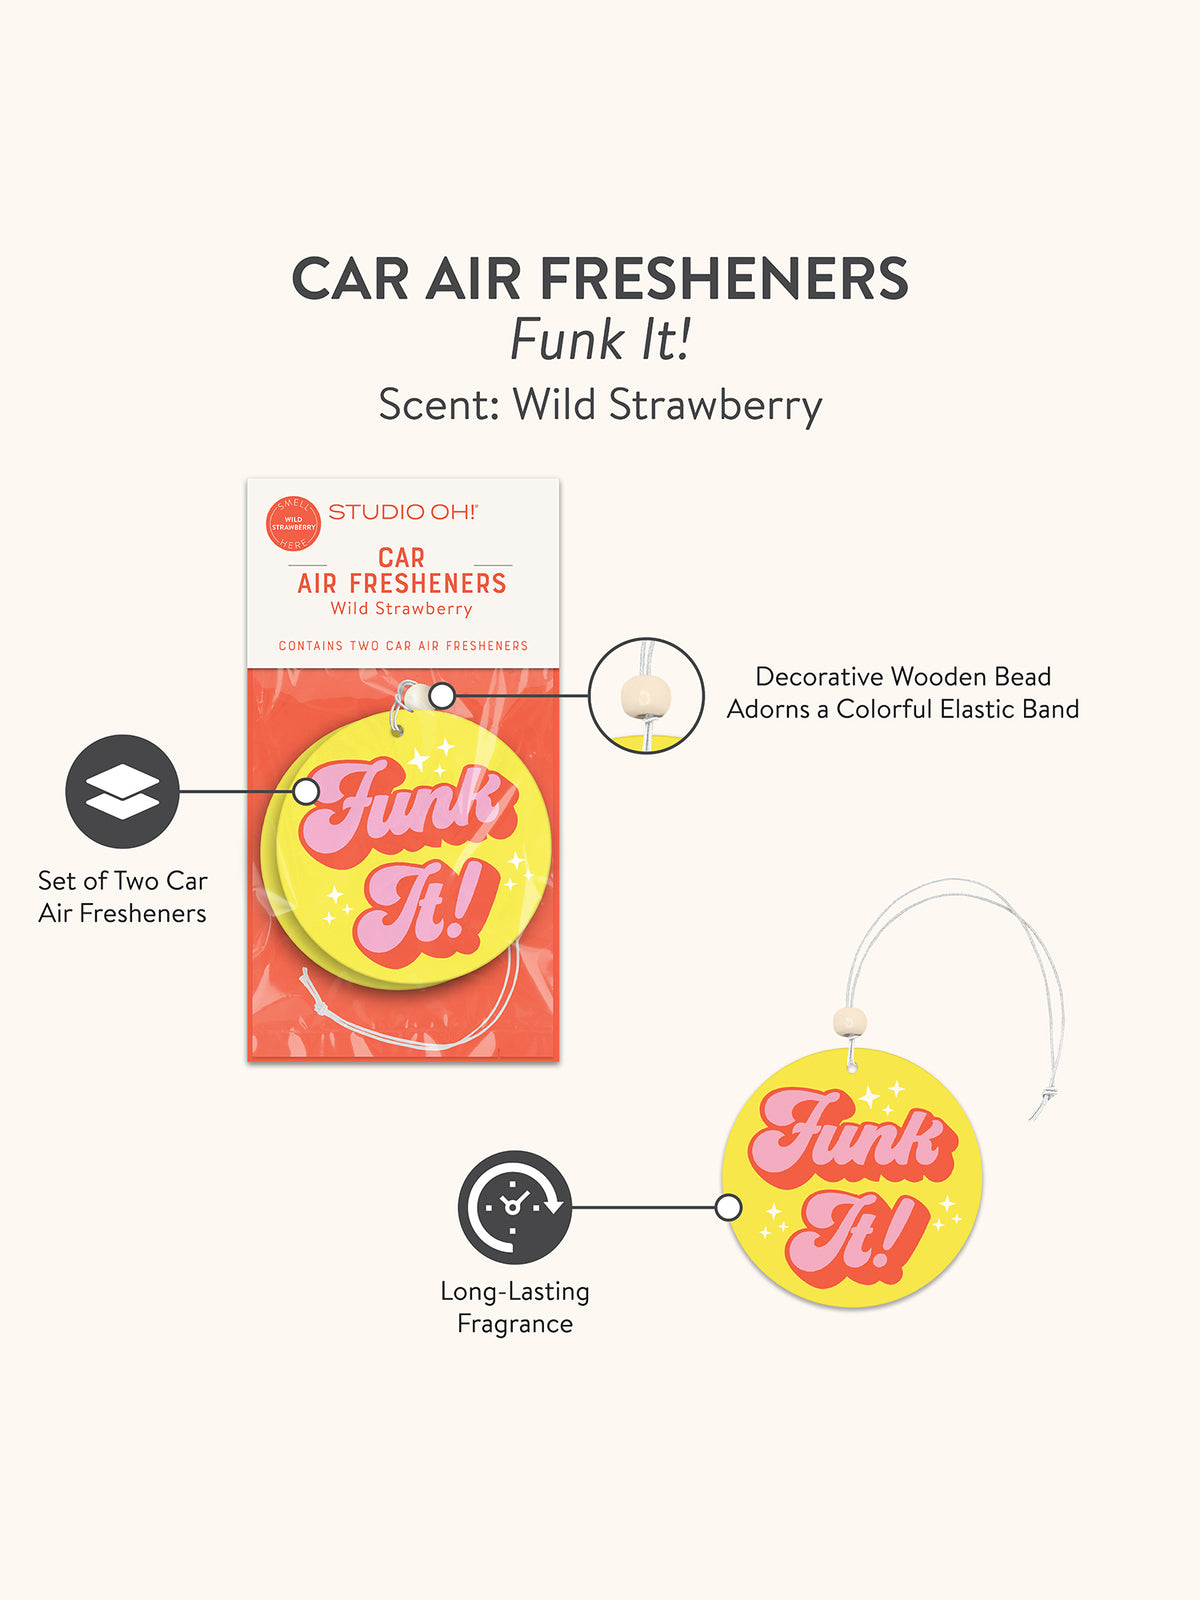 Funk It! Car Air Freshener